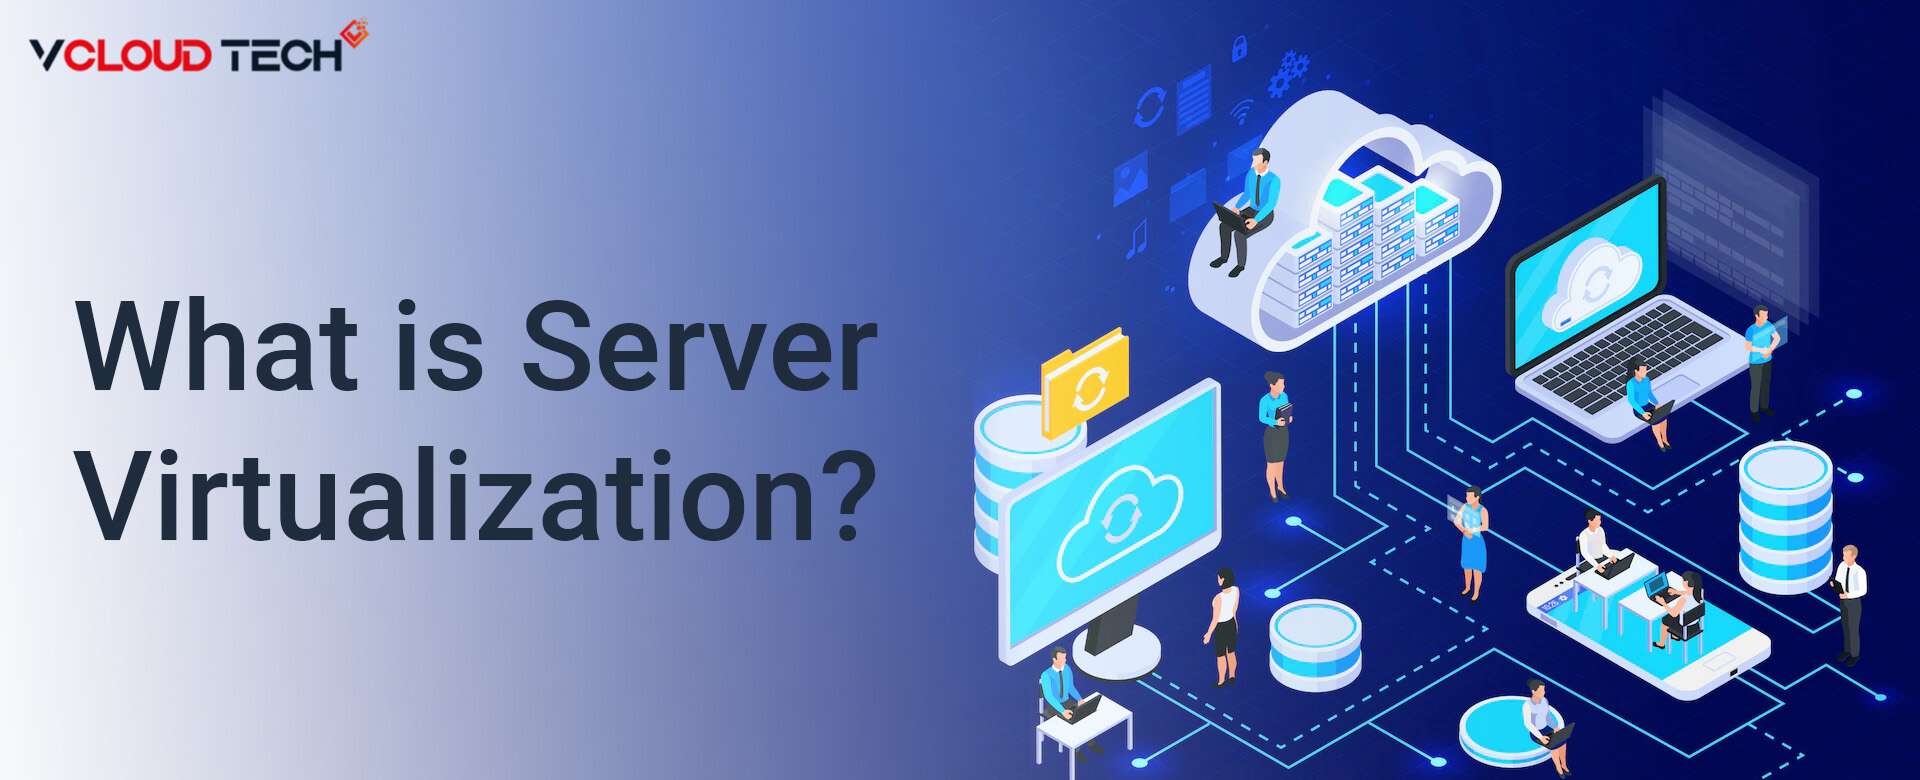 What is Server Virtualization - vCloud Tech